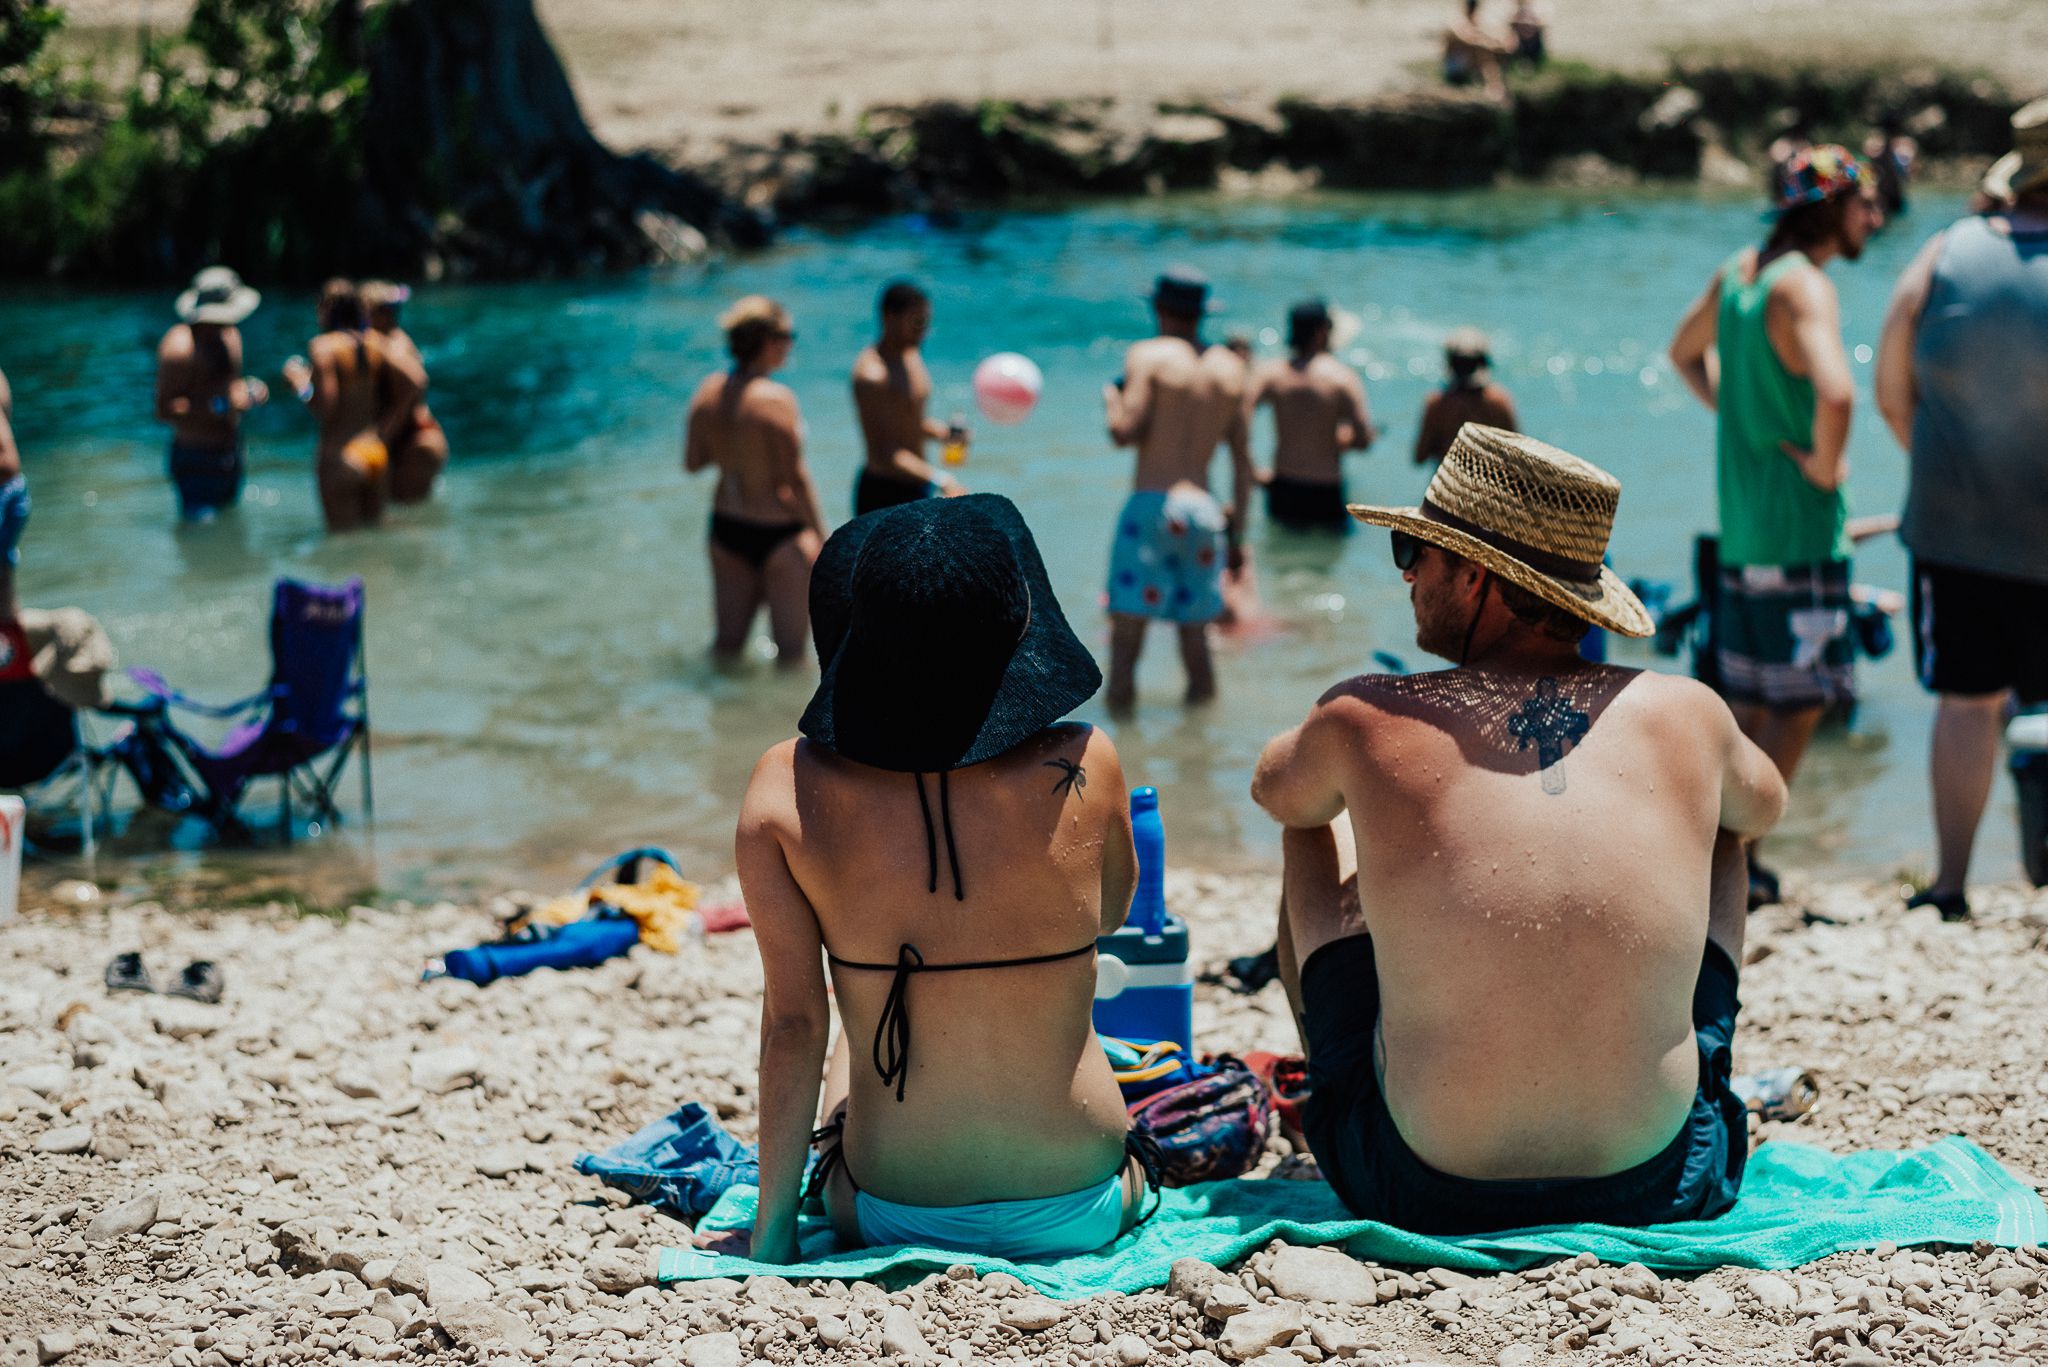 sarastrick social atmosphere 8 Float Fest Offers One Wet Hot American Summer in Texas